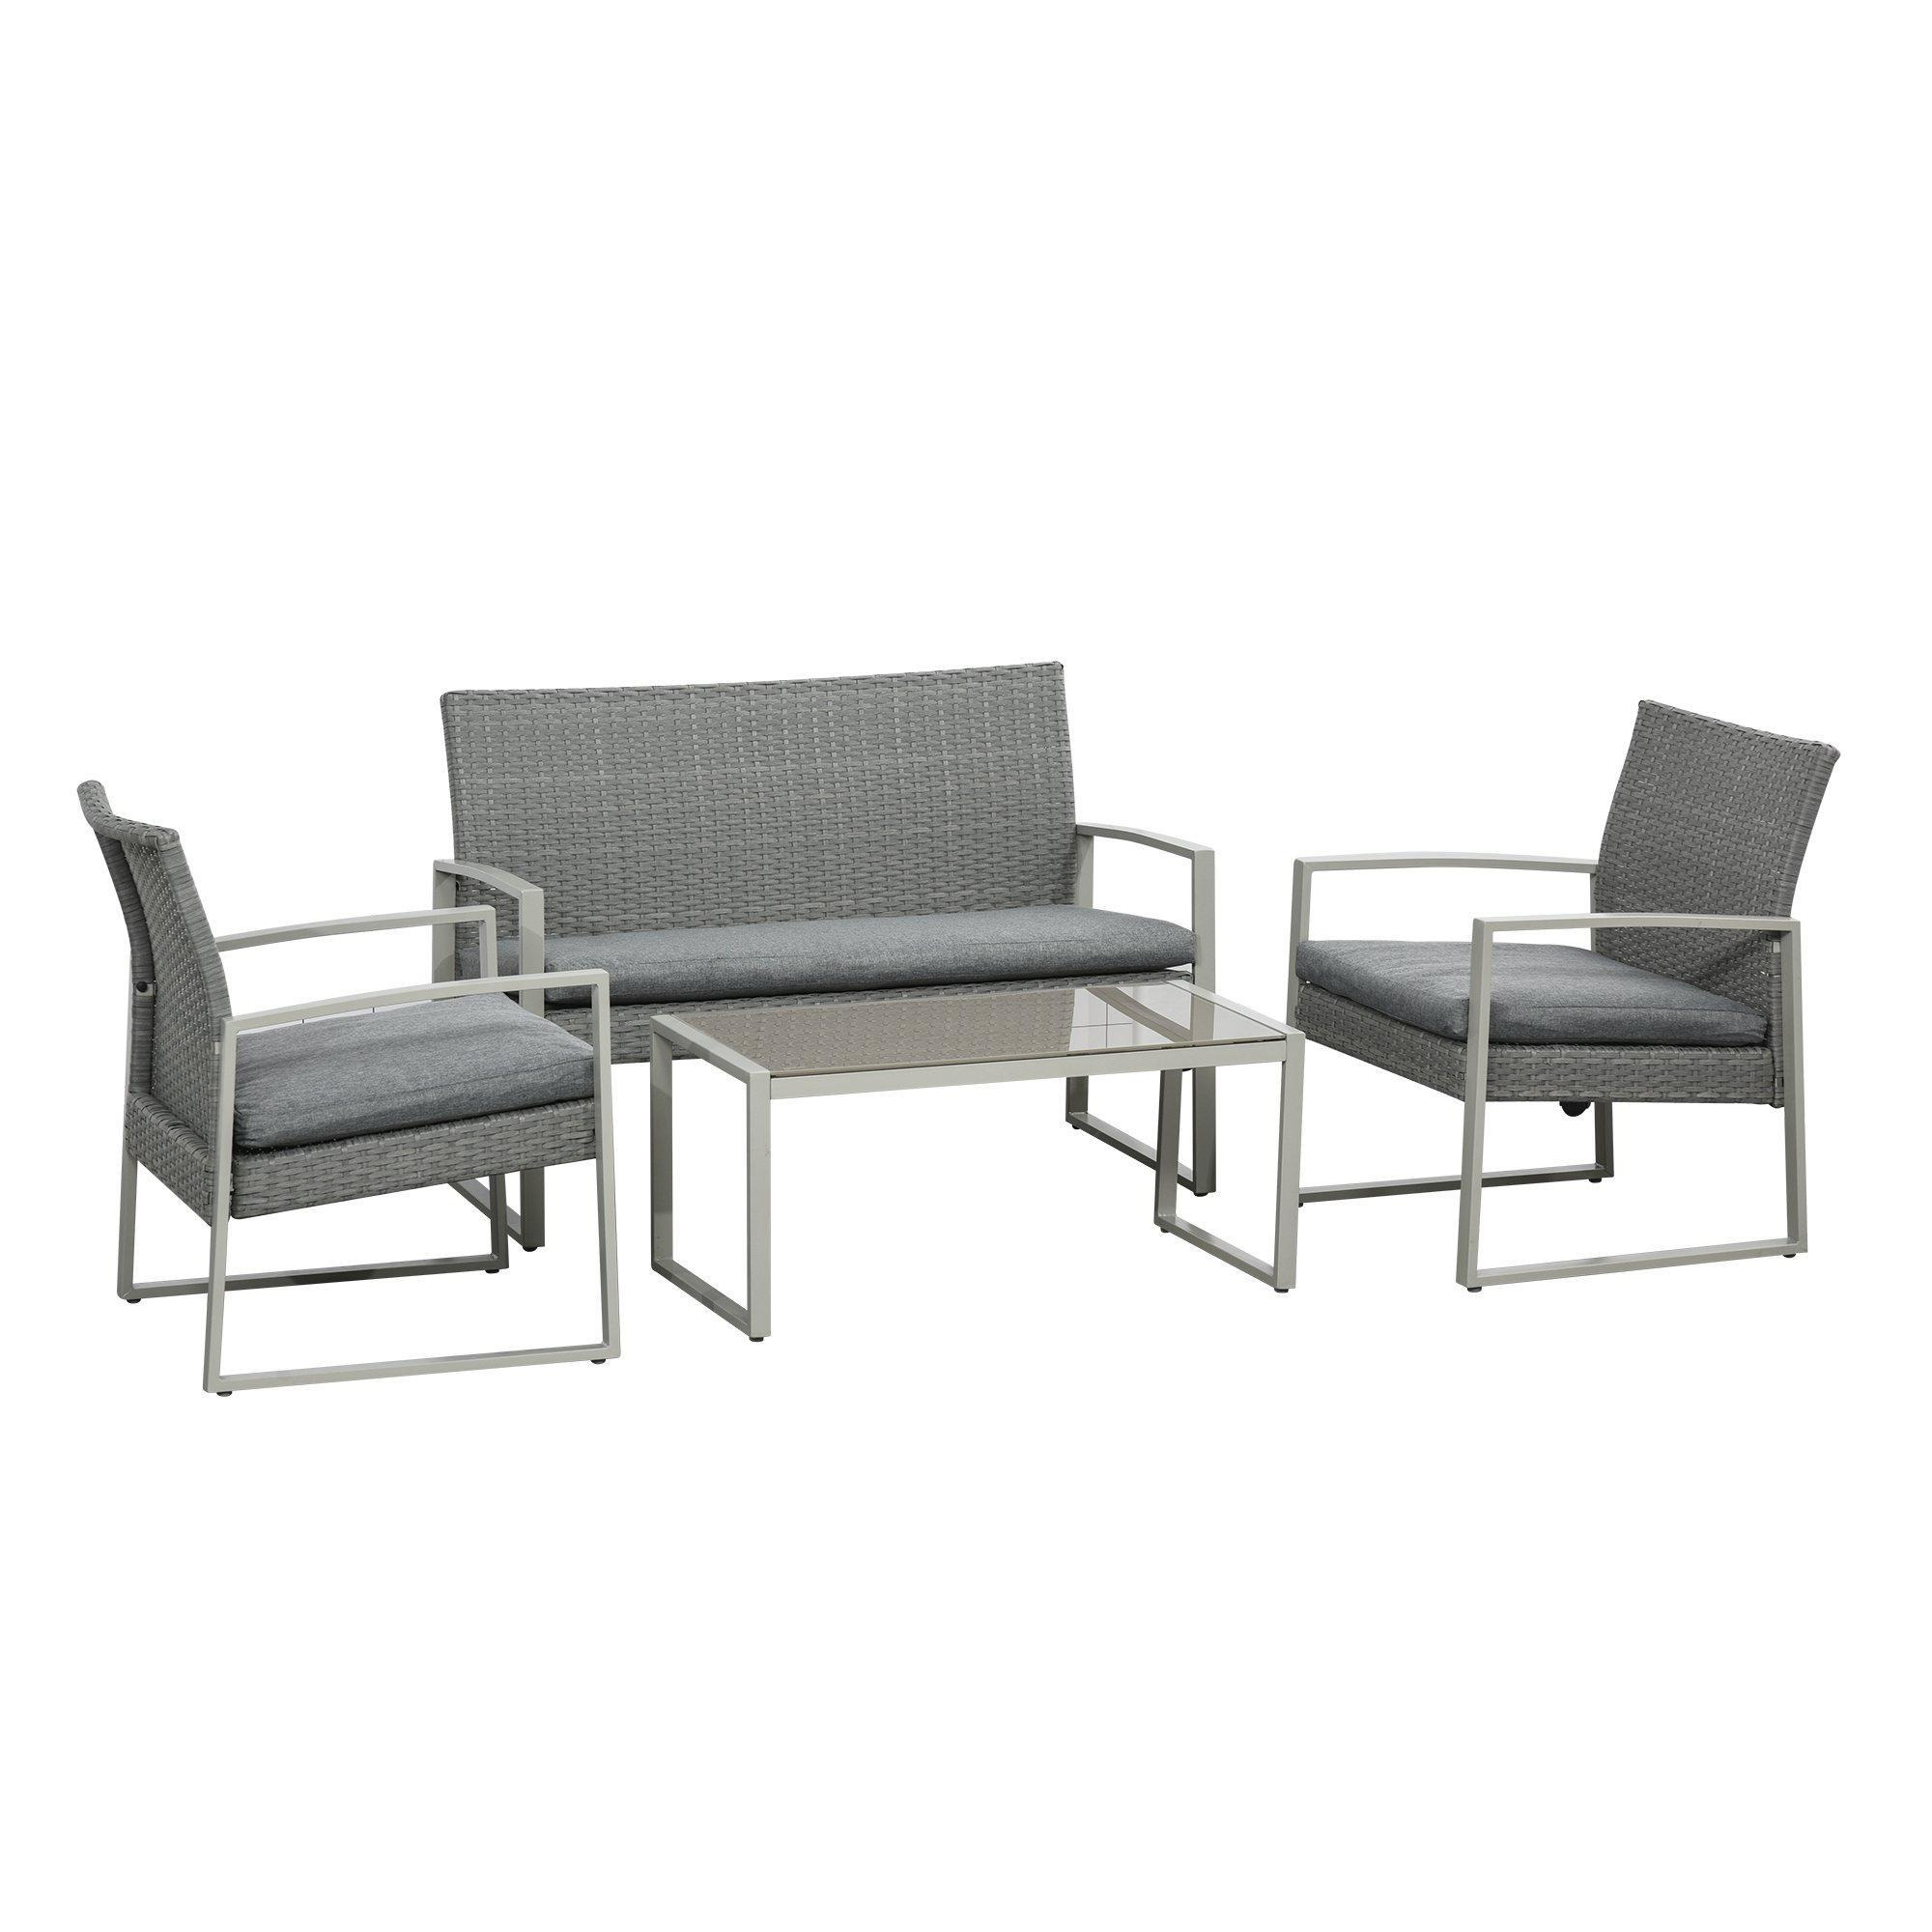 4 PCs Wicker Sofa Set PE Rattan Outdoor Conservatory Furniture w/ Cushion - image 1